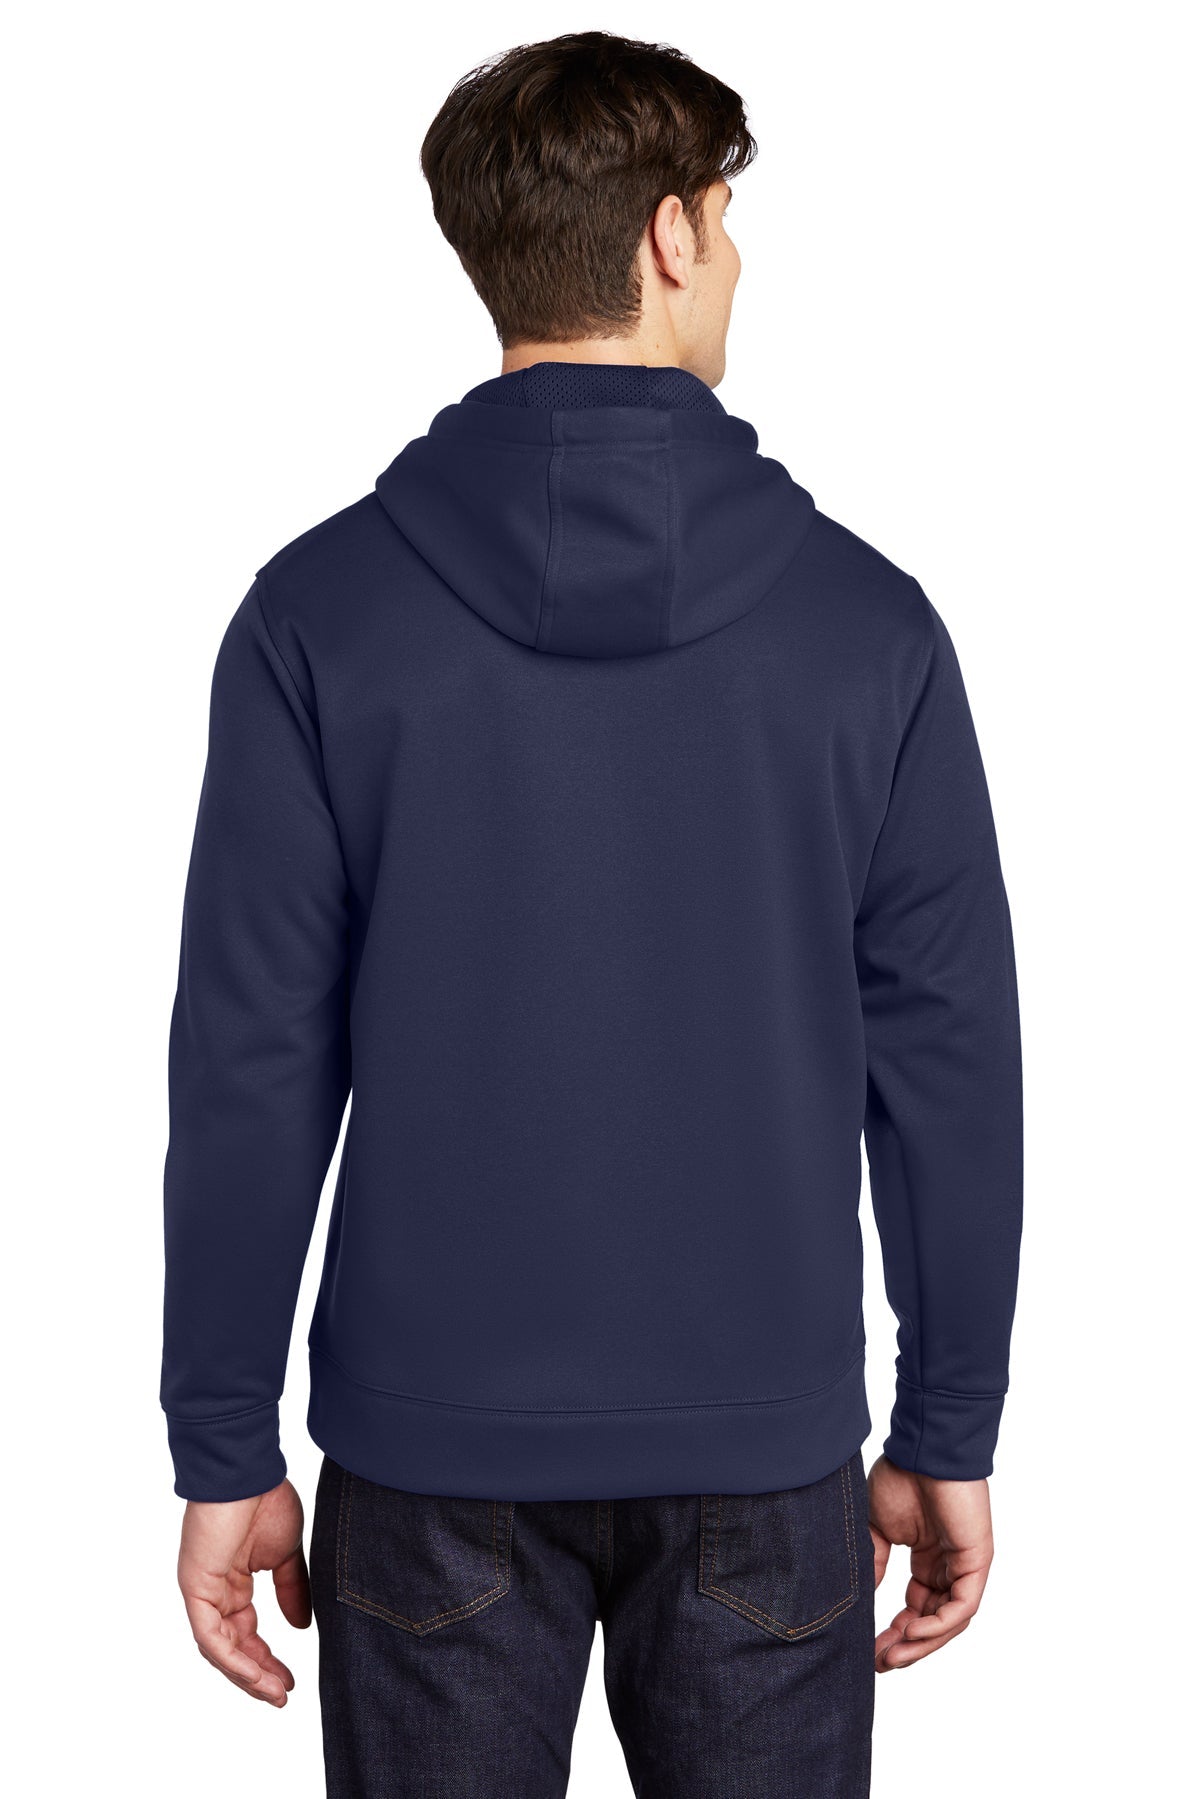 sport-tek_st290 _true navy_company_logo_sweatshirts